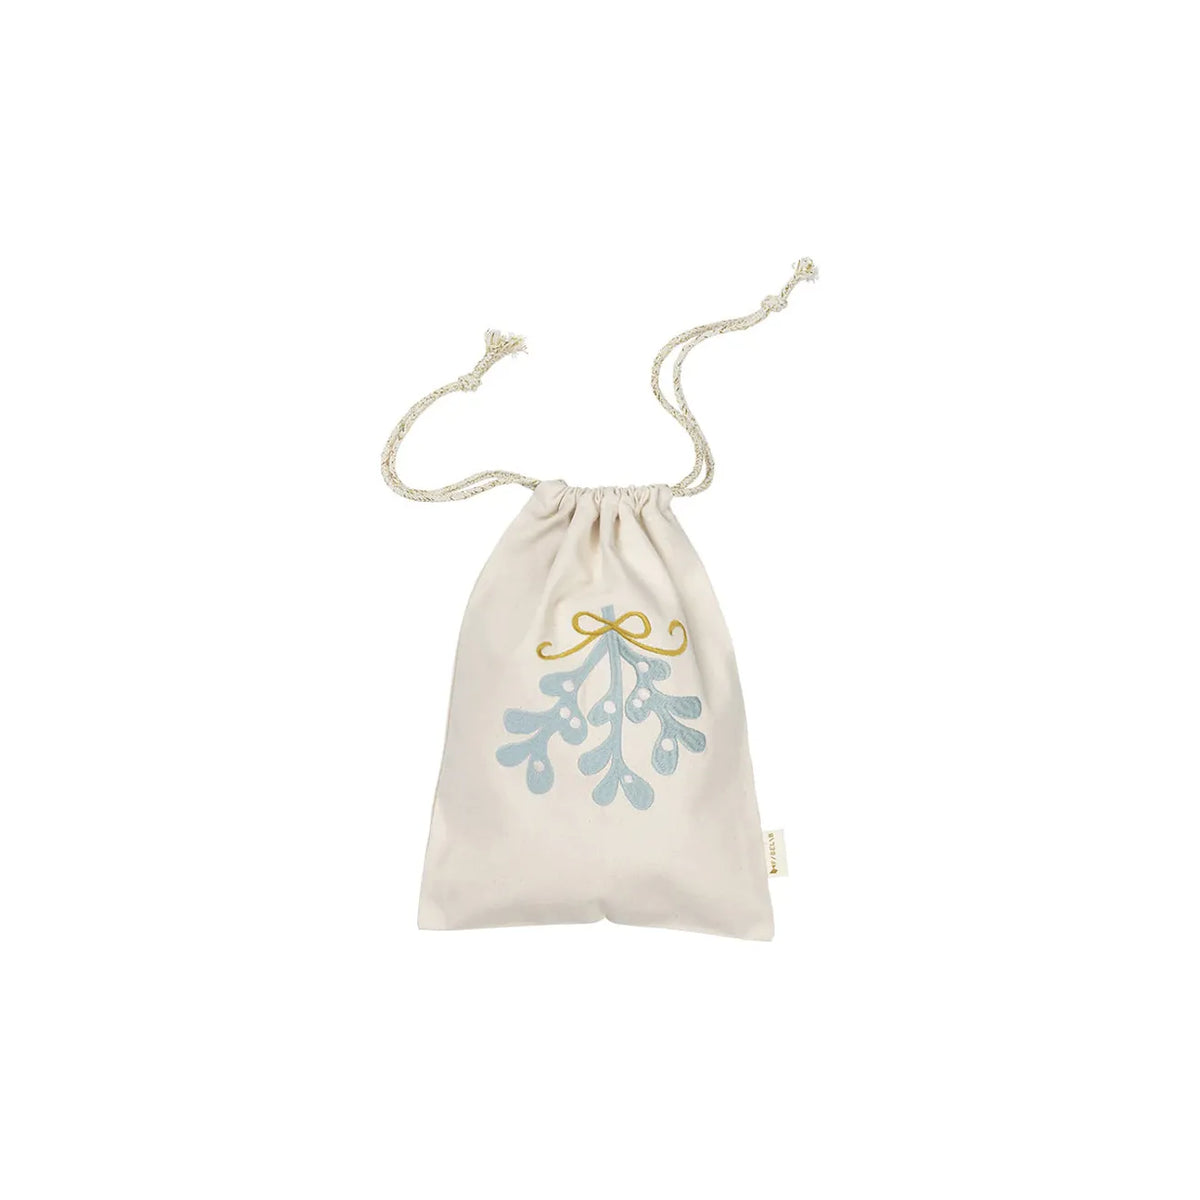 Mistletoe Embroidered Christmas Gift Bag - Natural, 30 cm